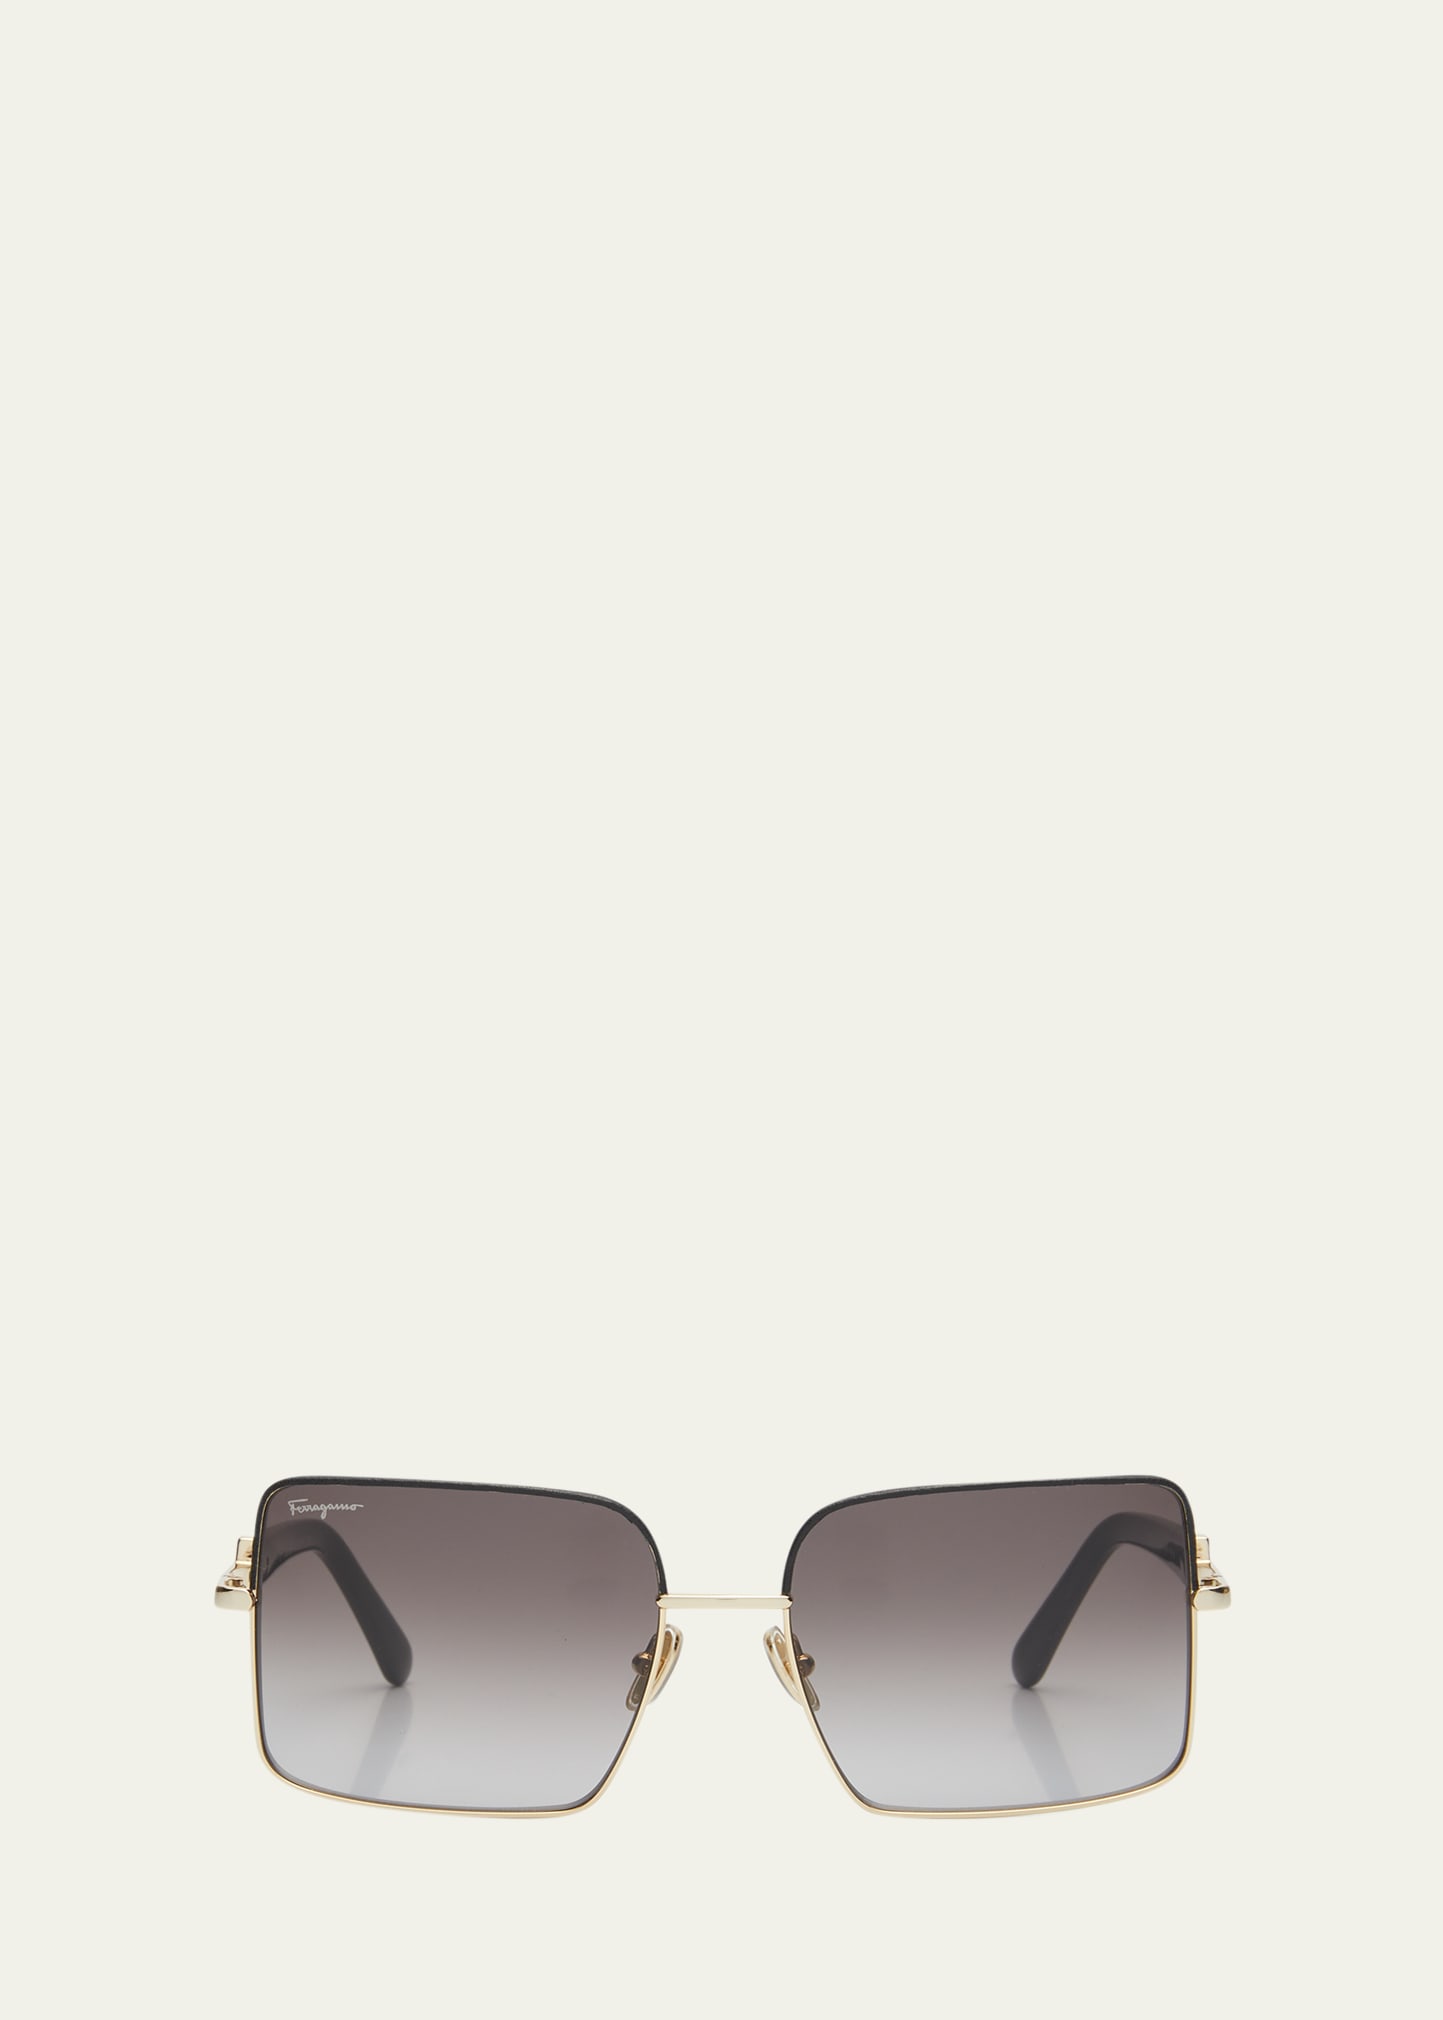 Gancio Square Mixed-Media Sunglasses